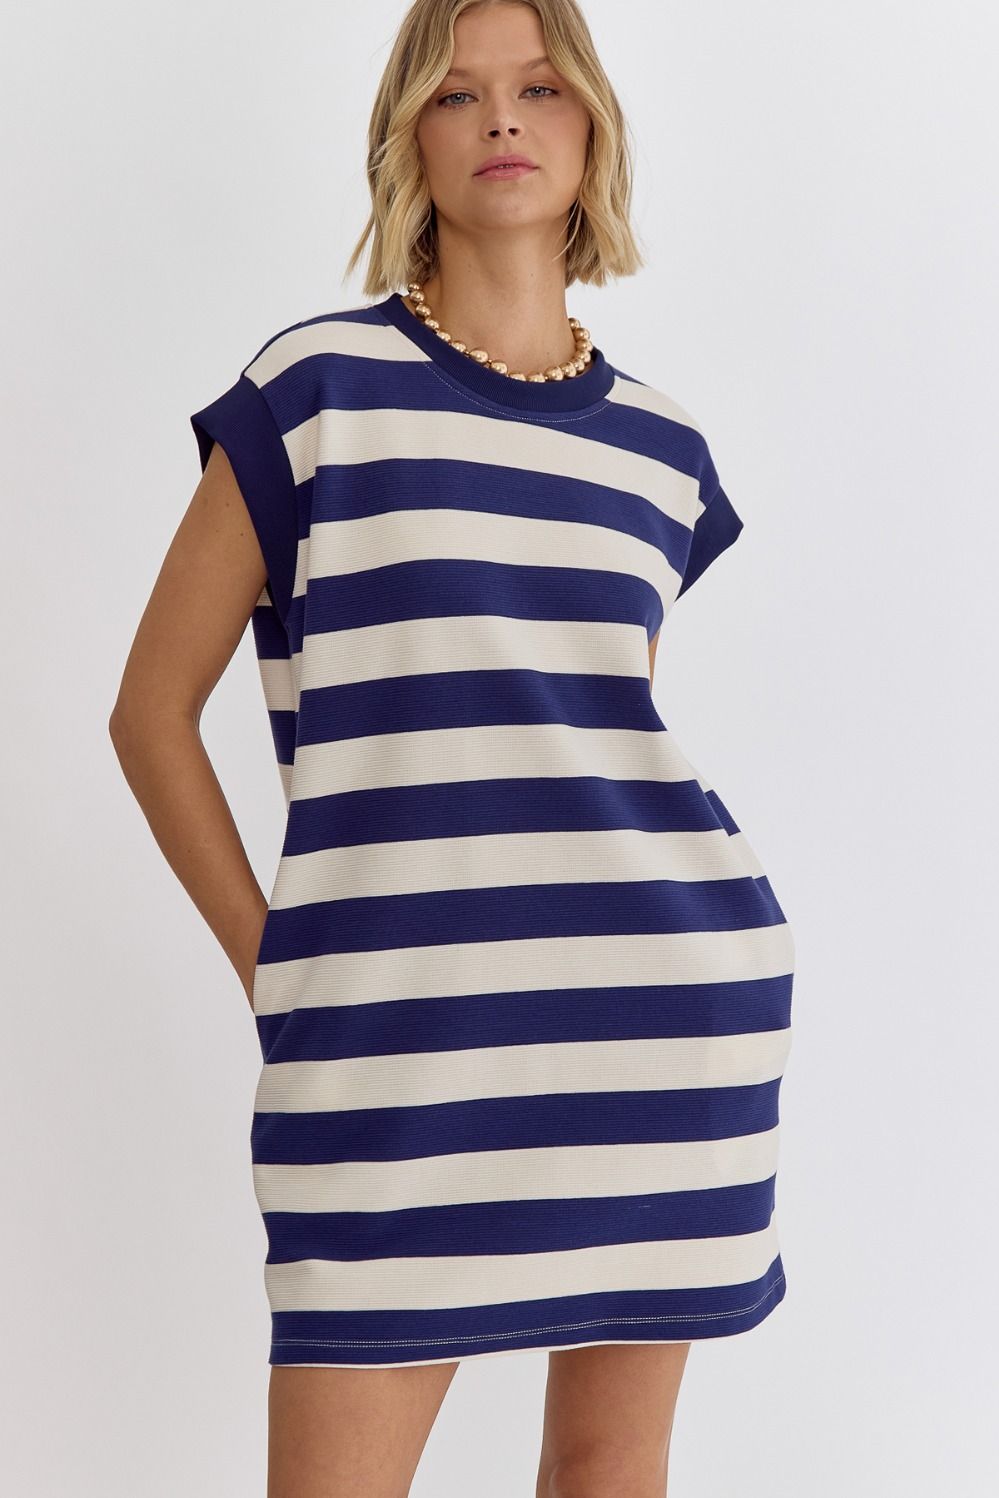 ENTRO INC Women's Dresses NAVY / S Stripe Sleeveless Mini Dress || David's Clothing D22406